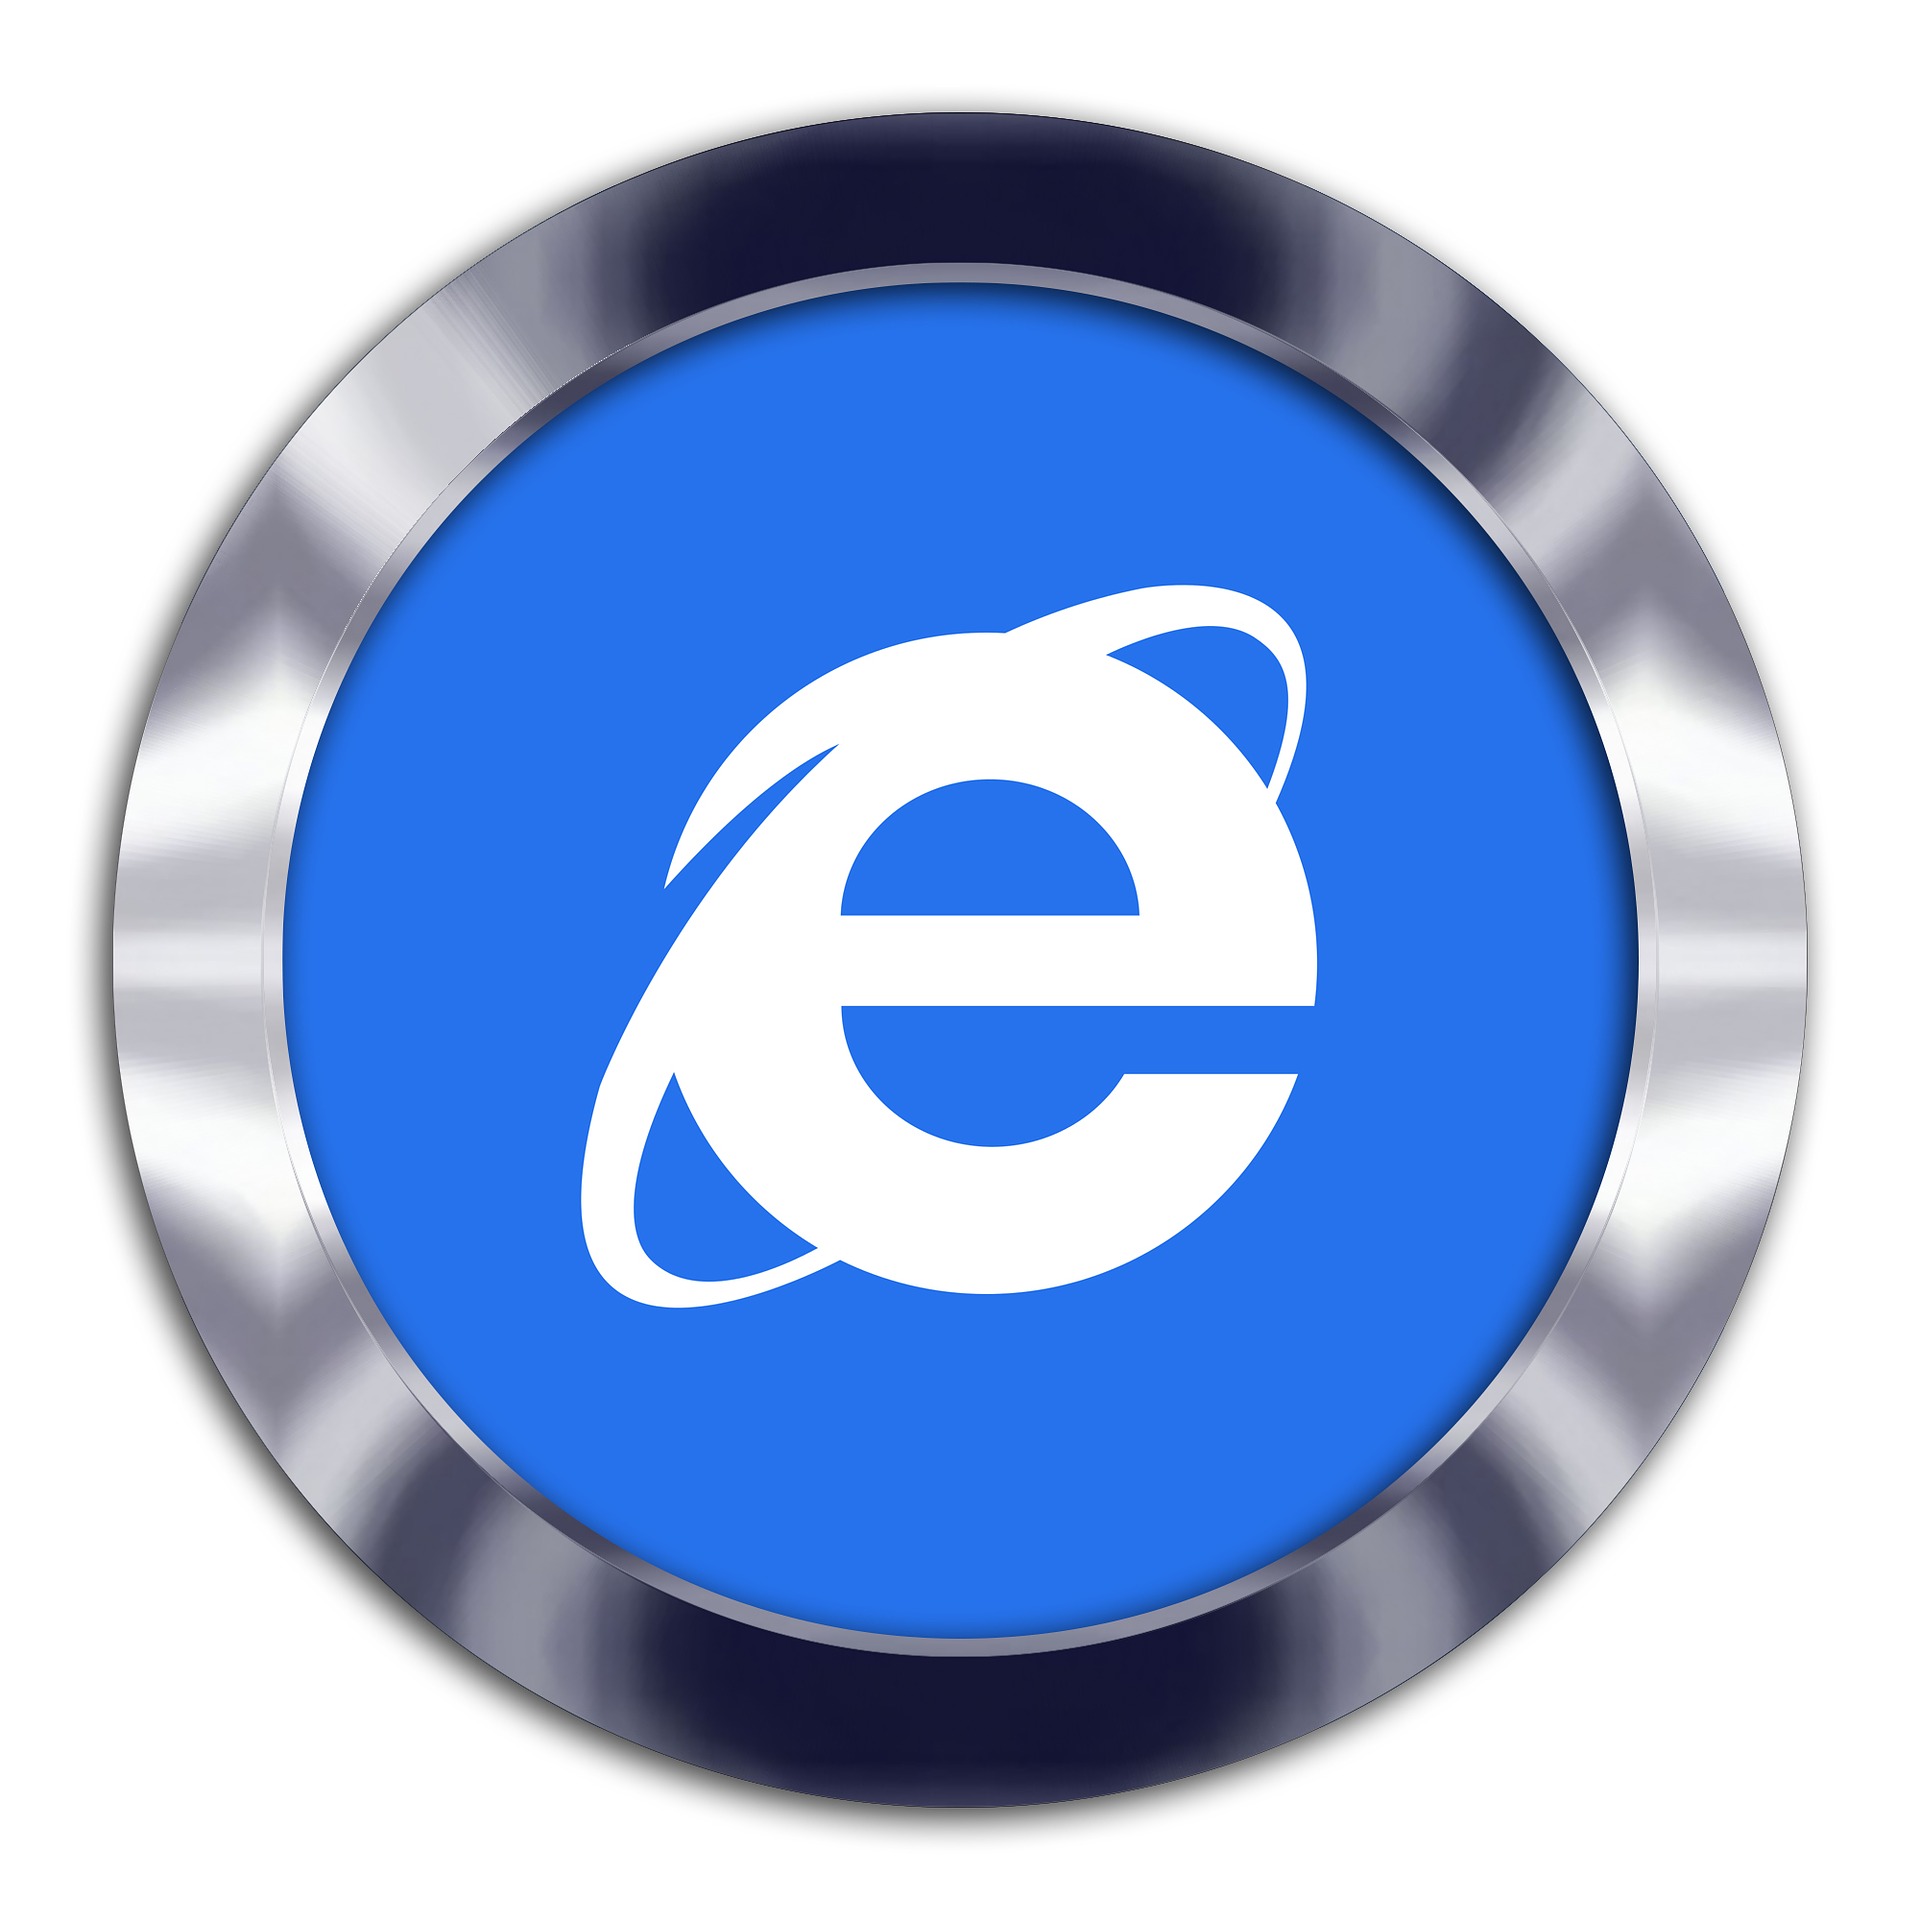 Интернет эксплорер edge. Internet Explorer. Значок интернета. Ярлык Internet Explorer. Internet Explorer браузер.